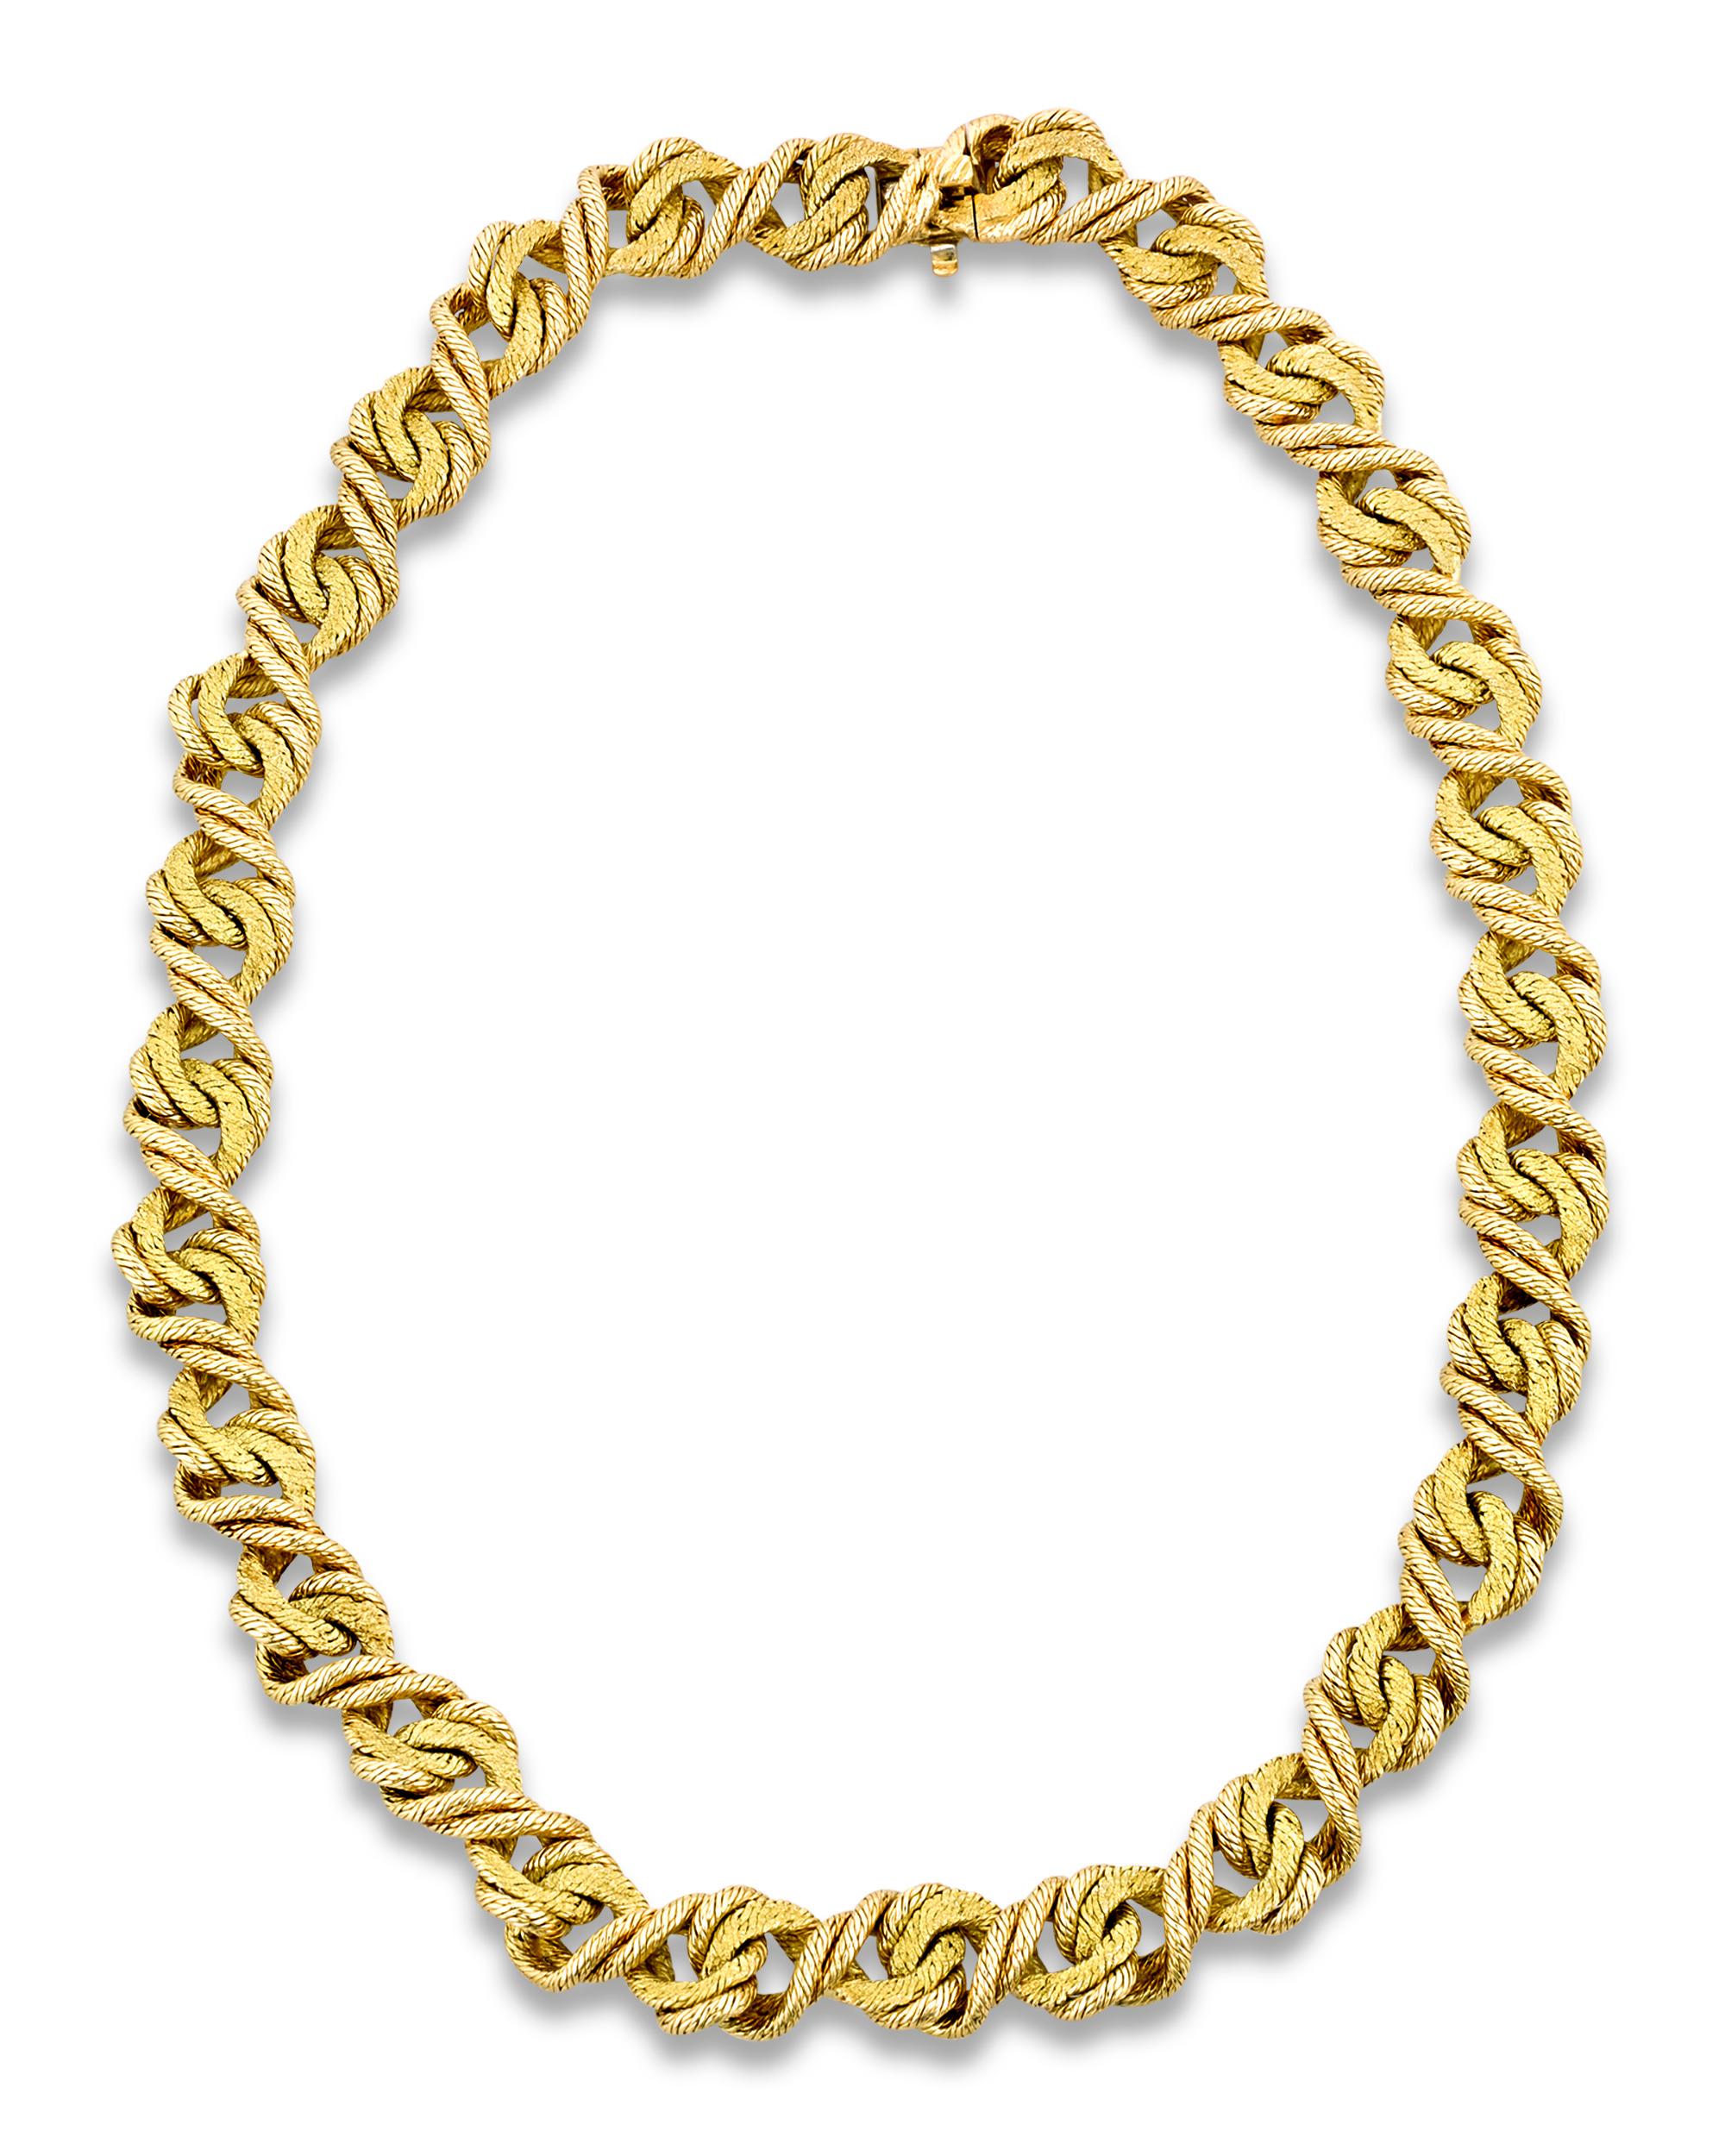 benzathine gold chain